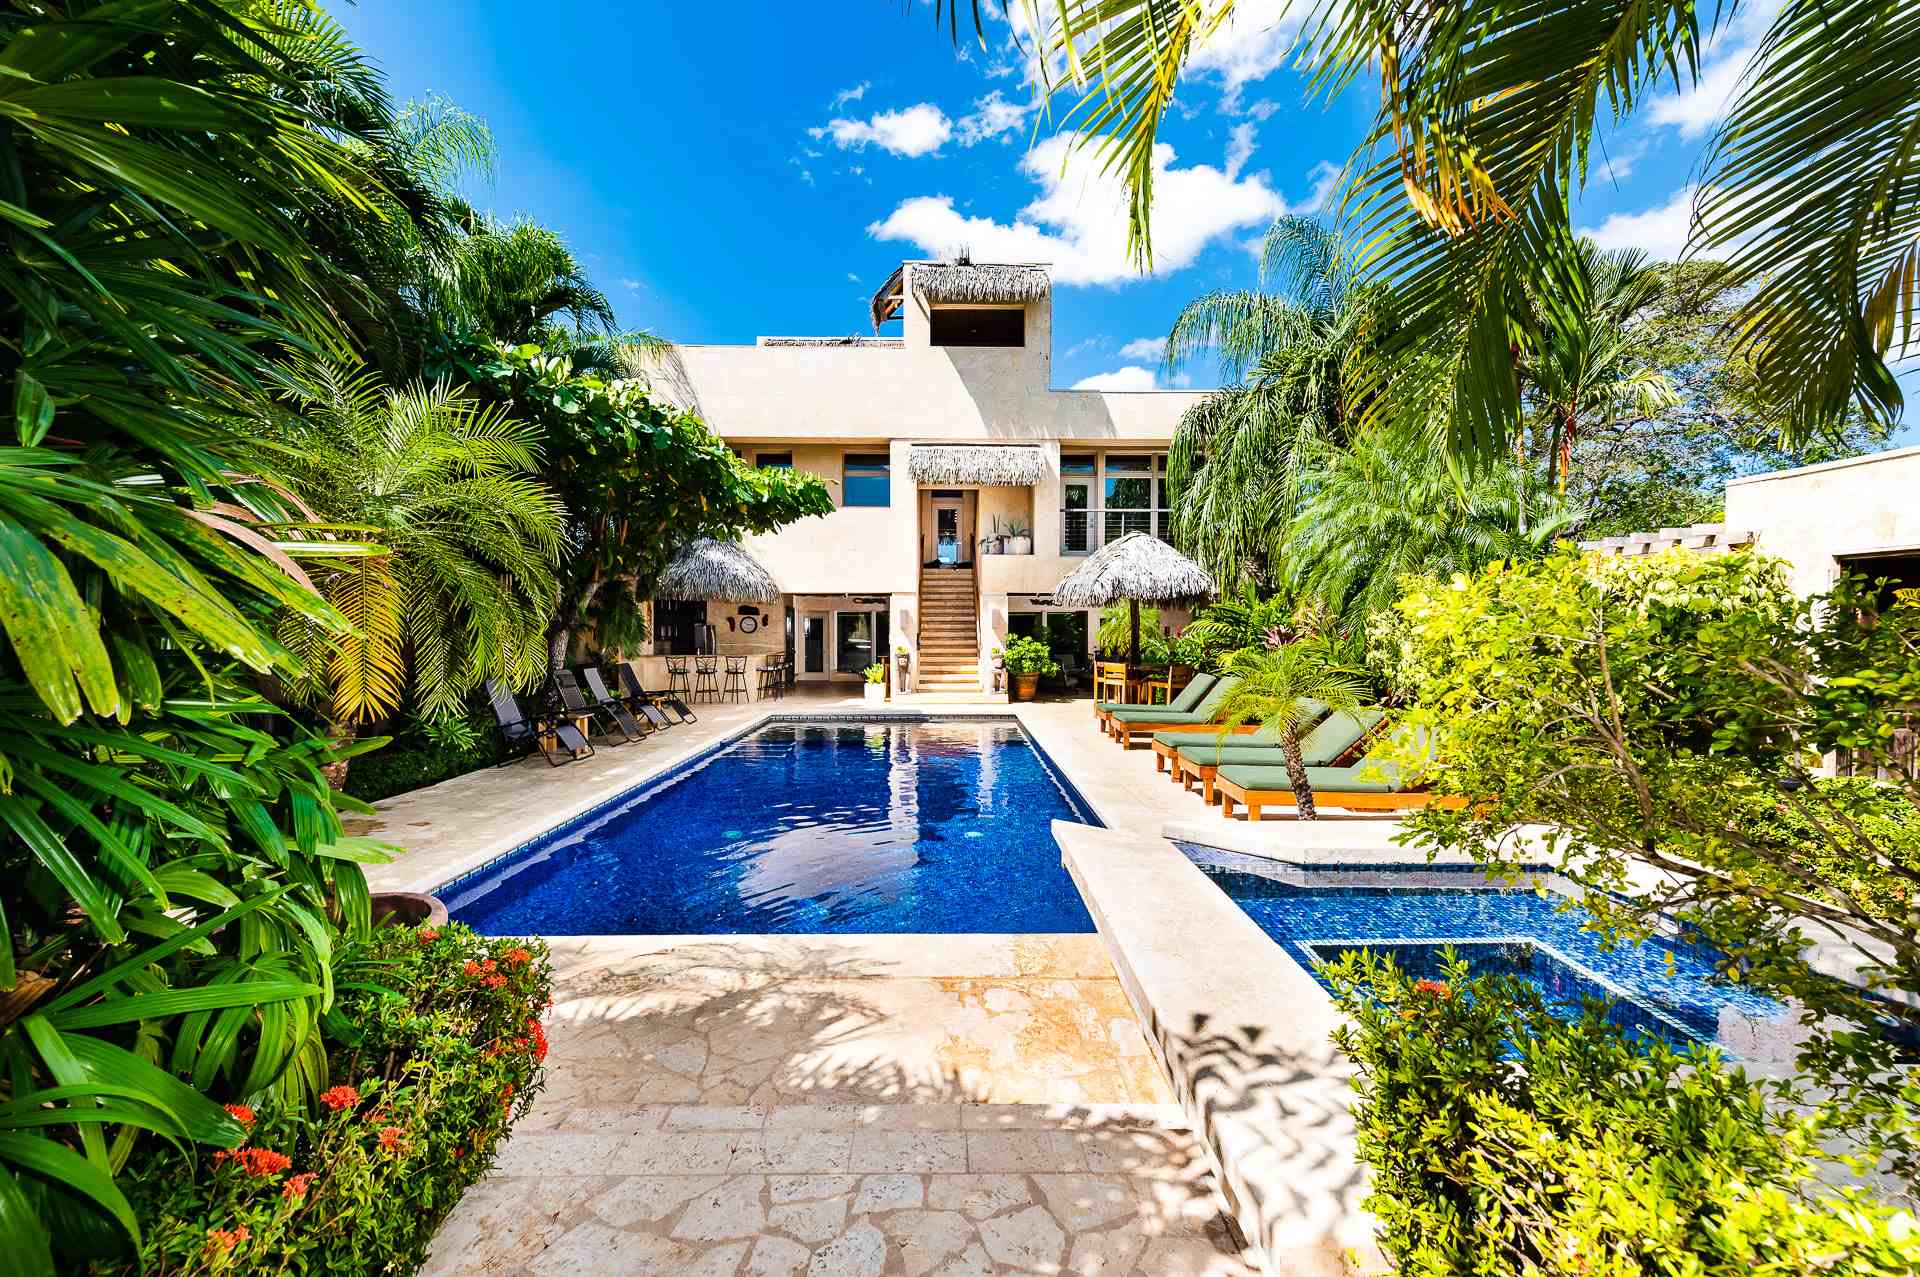 Casa MelRay house for sale Tamarindo Costa Rica property